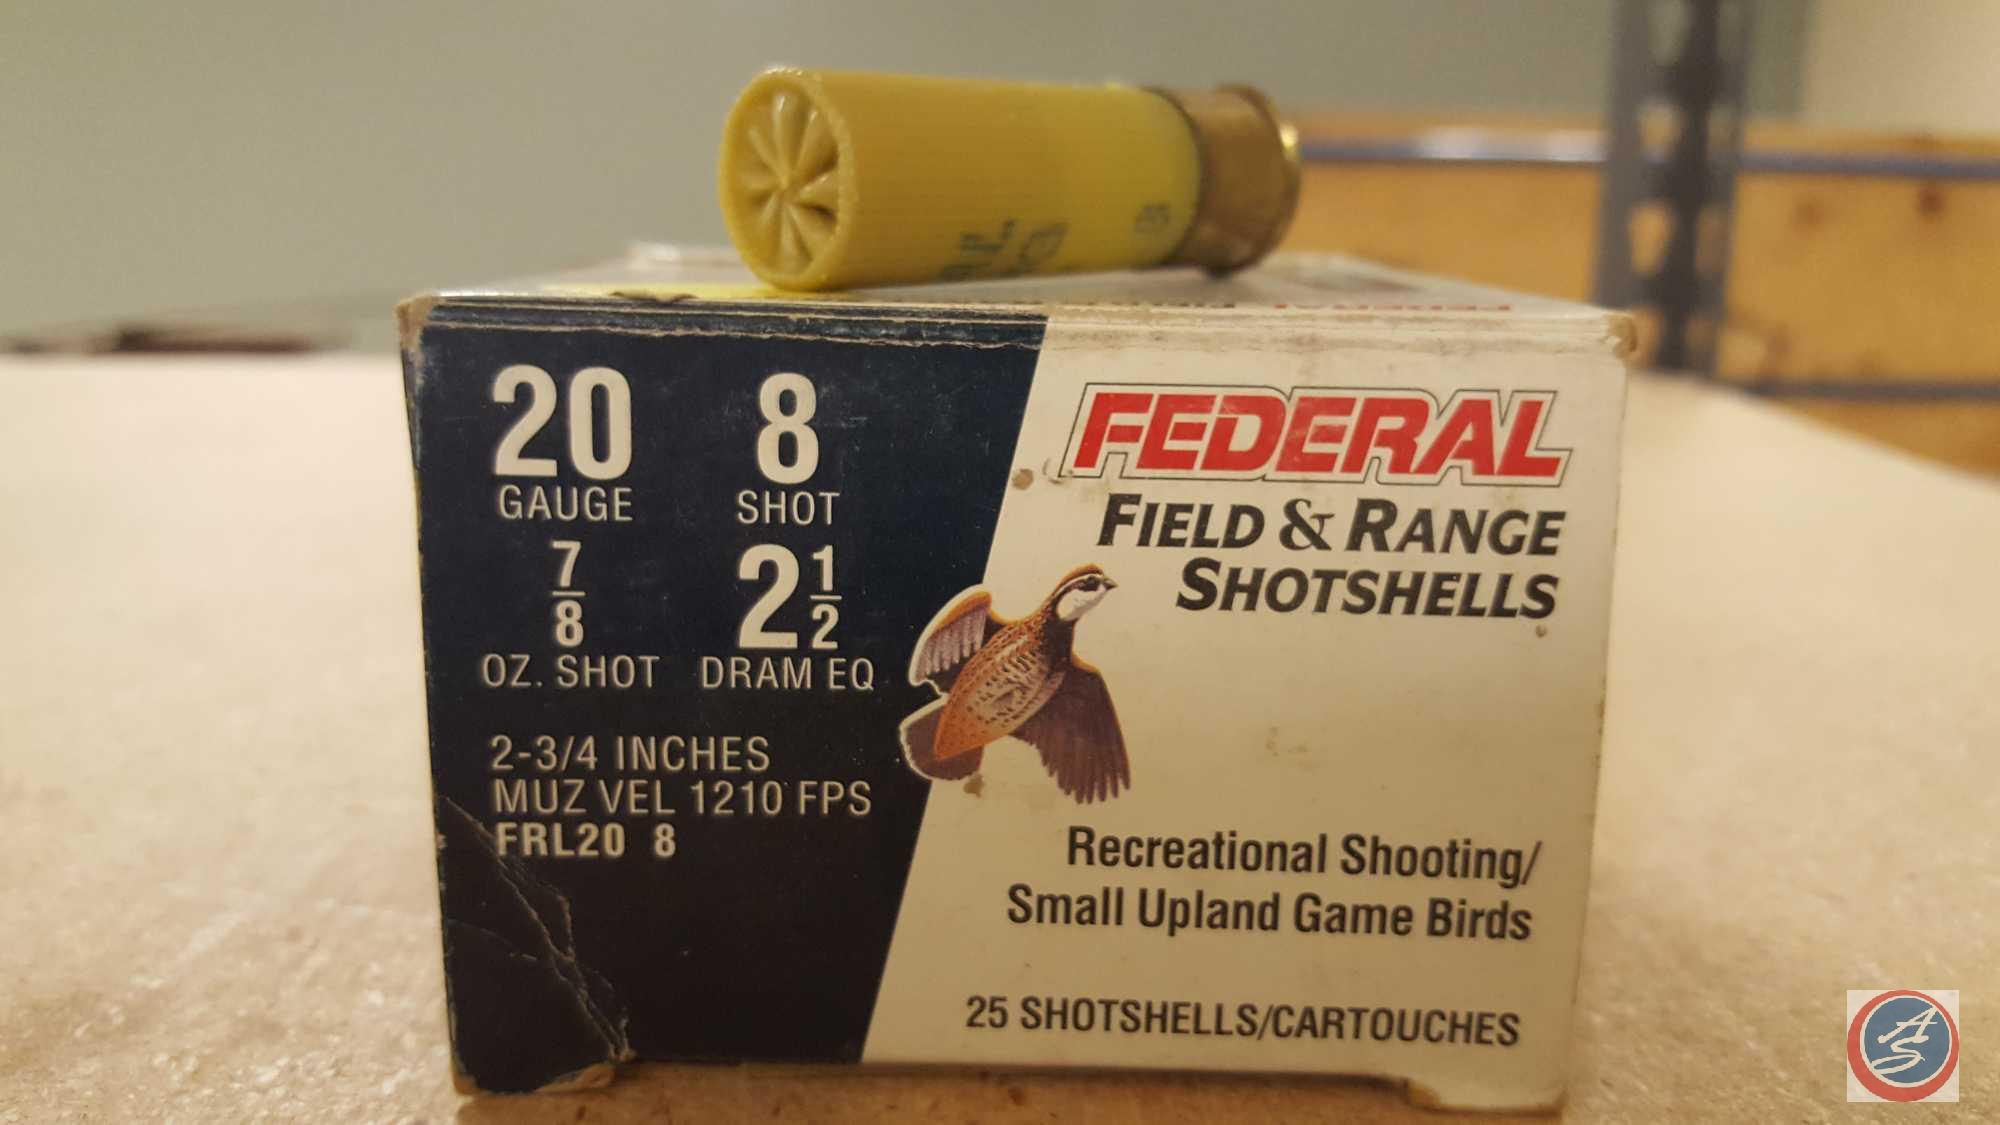 Federal Field and Range 20 GA. Shotgun Shells (25 rounds), Federal Hi-Power 20 GA. Shotgun Shells